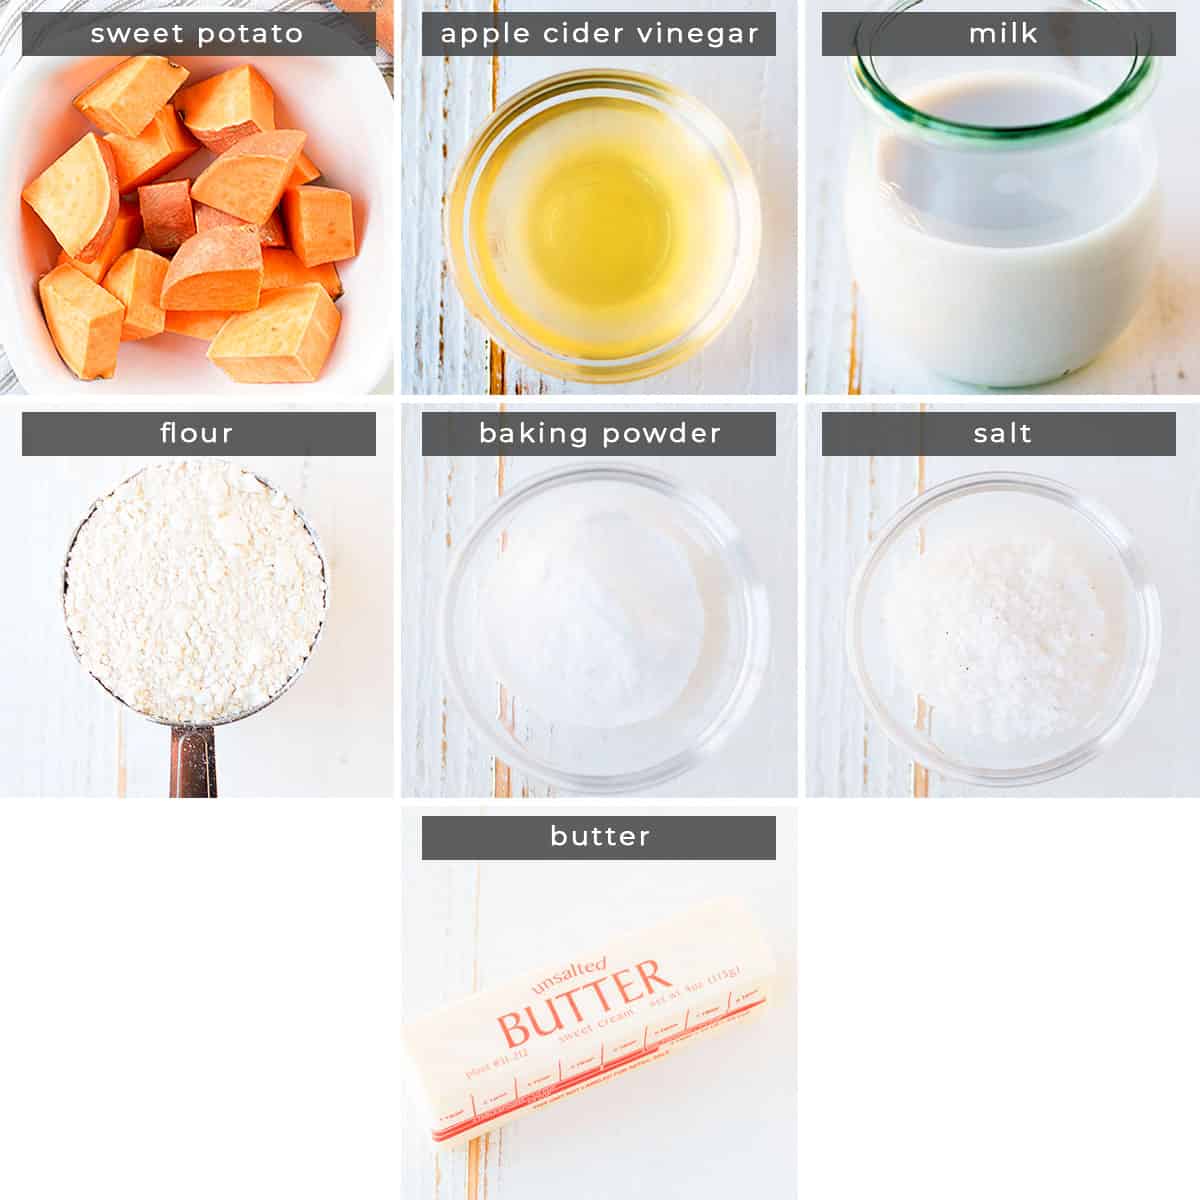 Image containing recipe ingredients sweet potato, apple cider vinegar, milk, flour, baking powder, salt, and butter. 